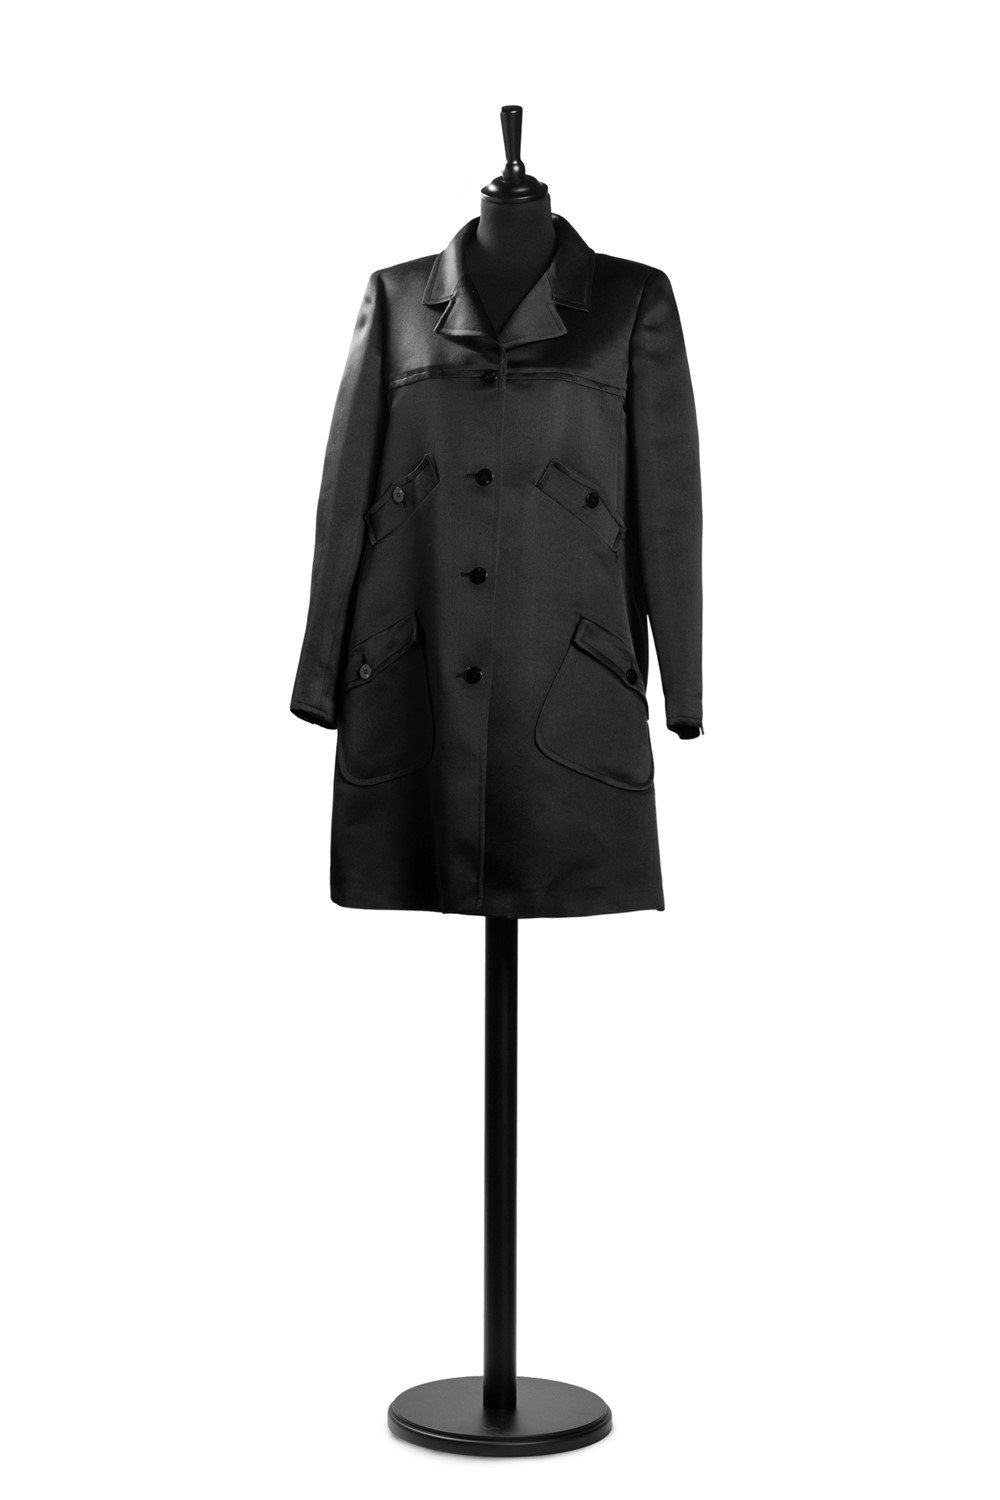 Chanel - Coat | Finarte | ArsValue.com